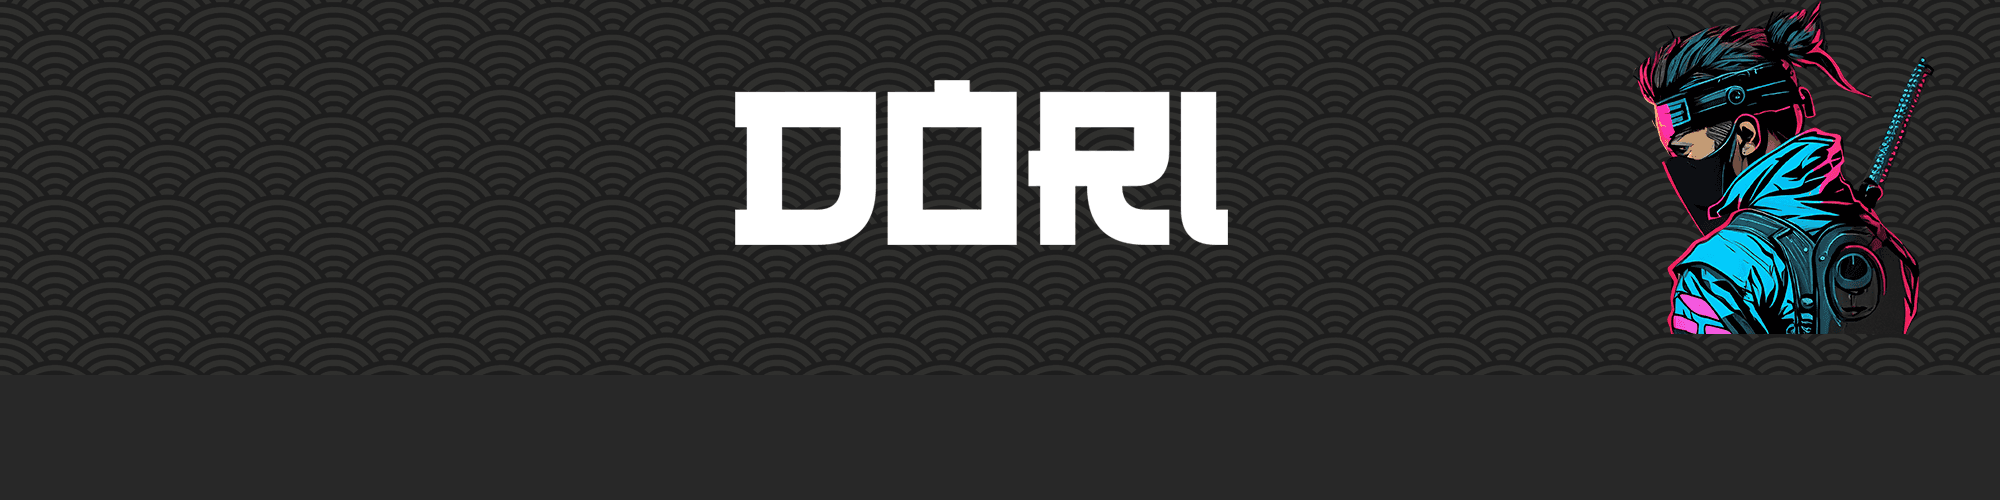 Dori_Deployer bannière